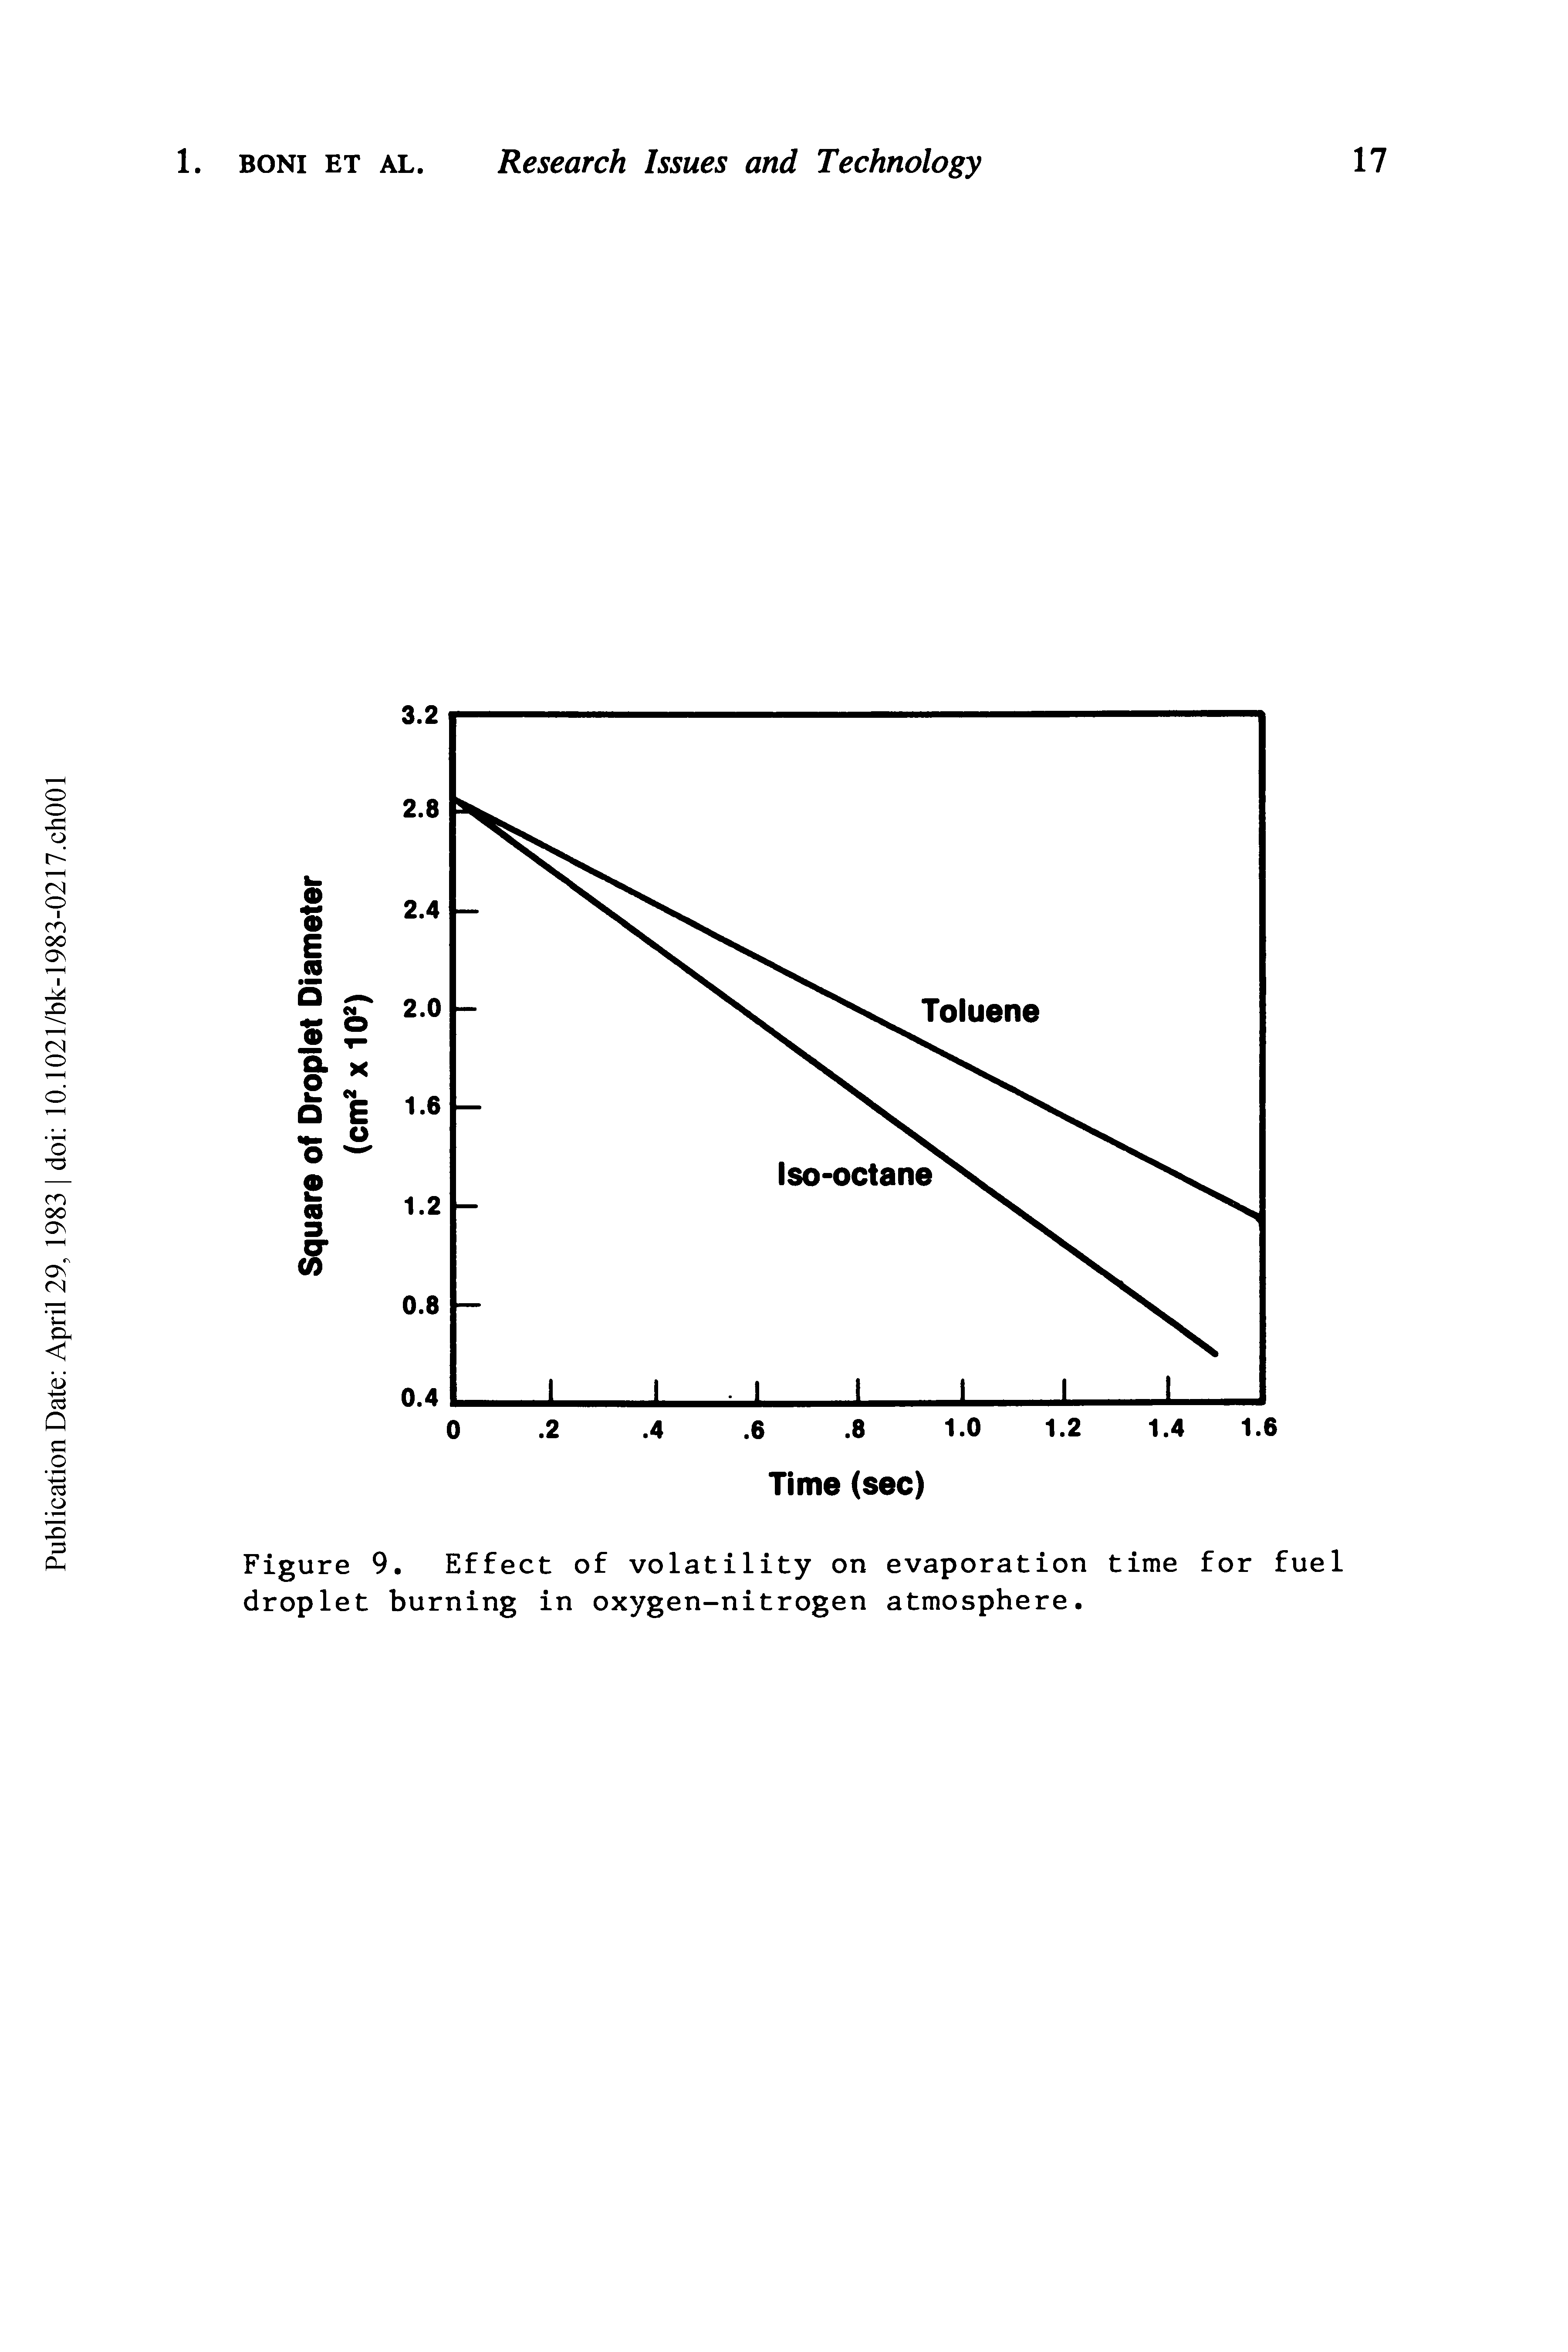 Figure 9. Effect of volatility on evaporation time for fuel droplet burning in oxygen-nitrogen atmosphere.